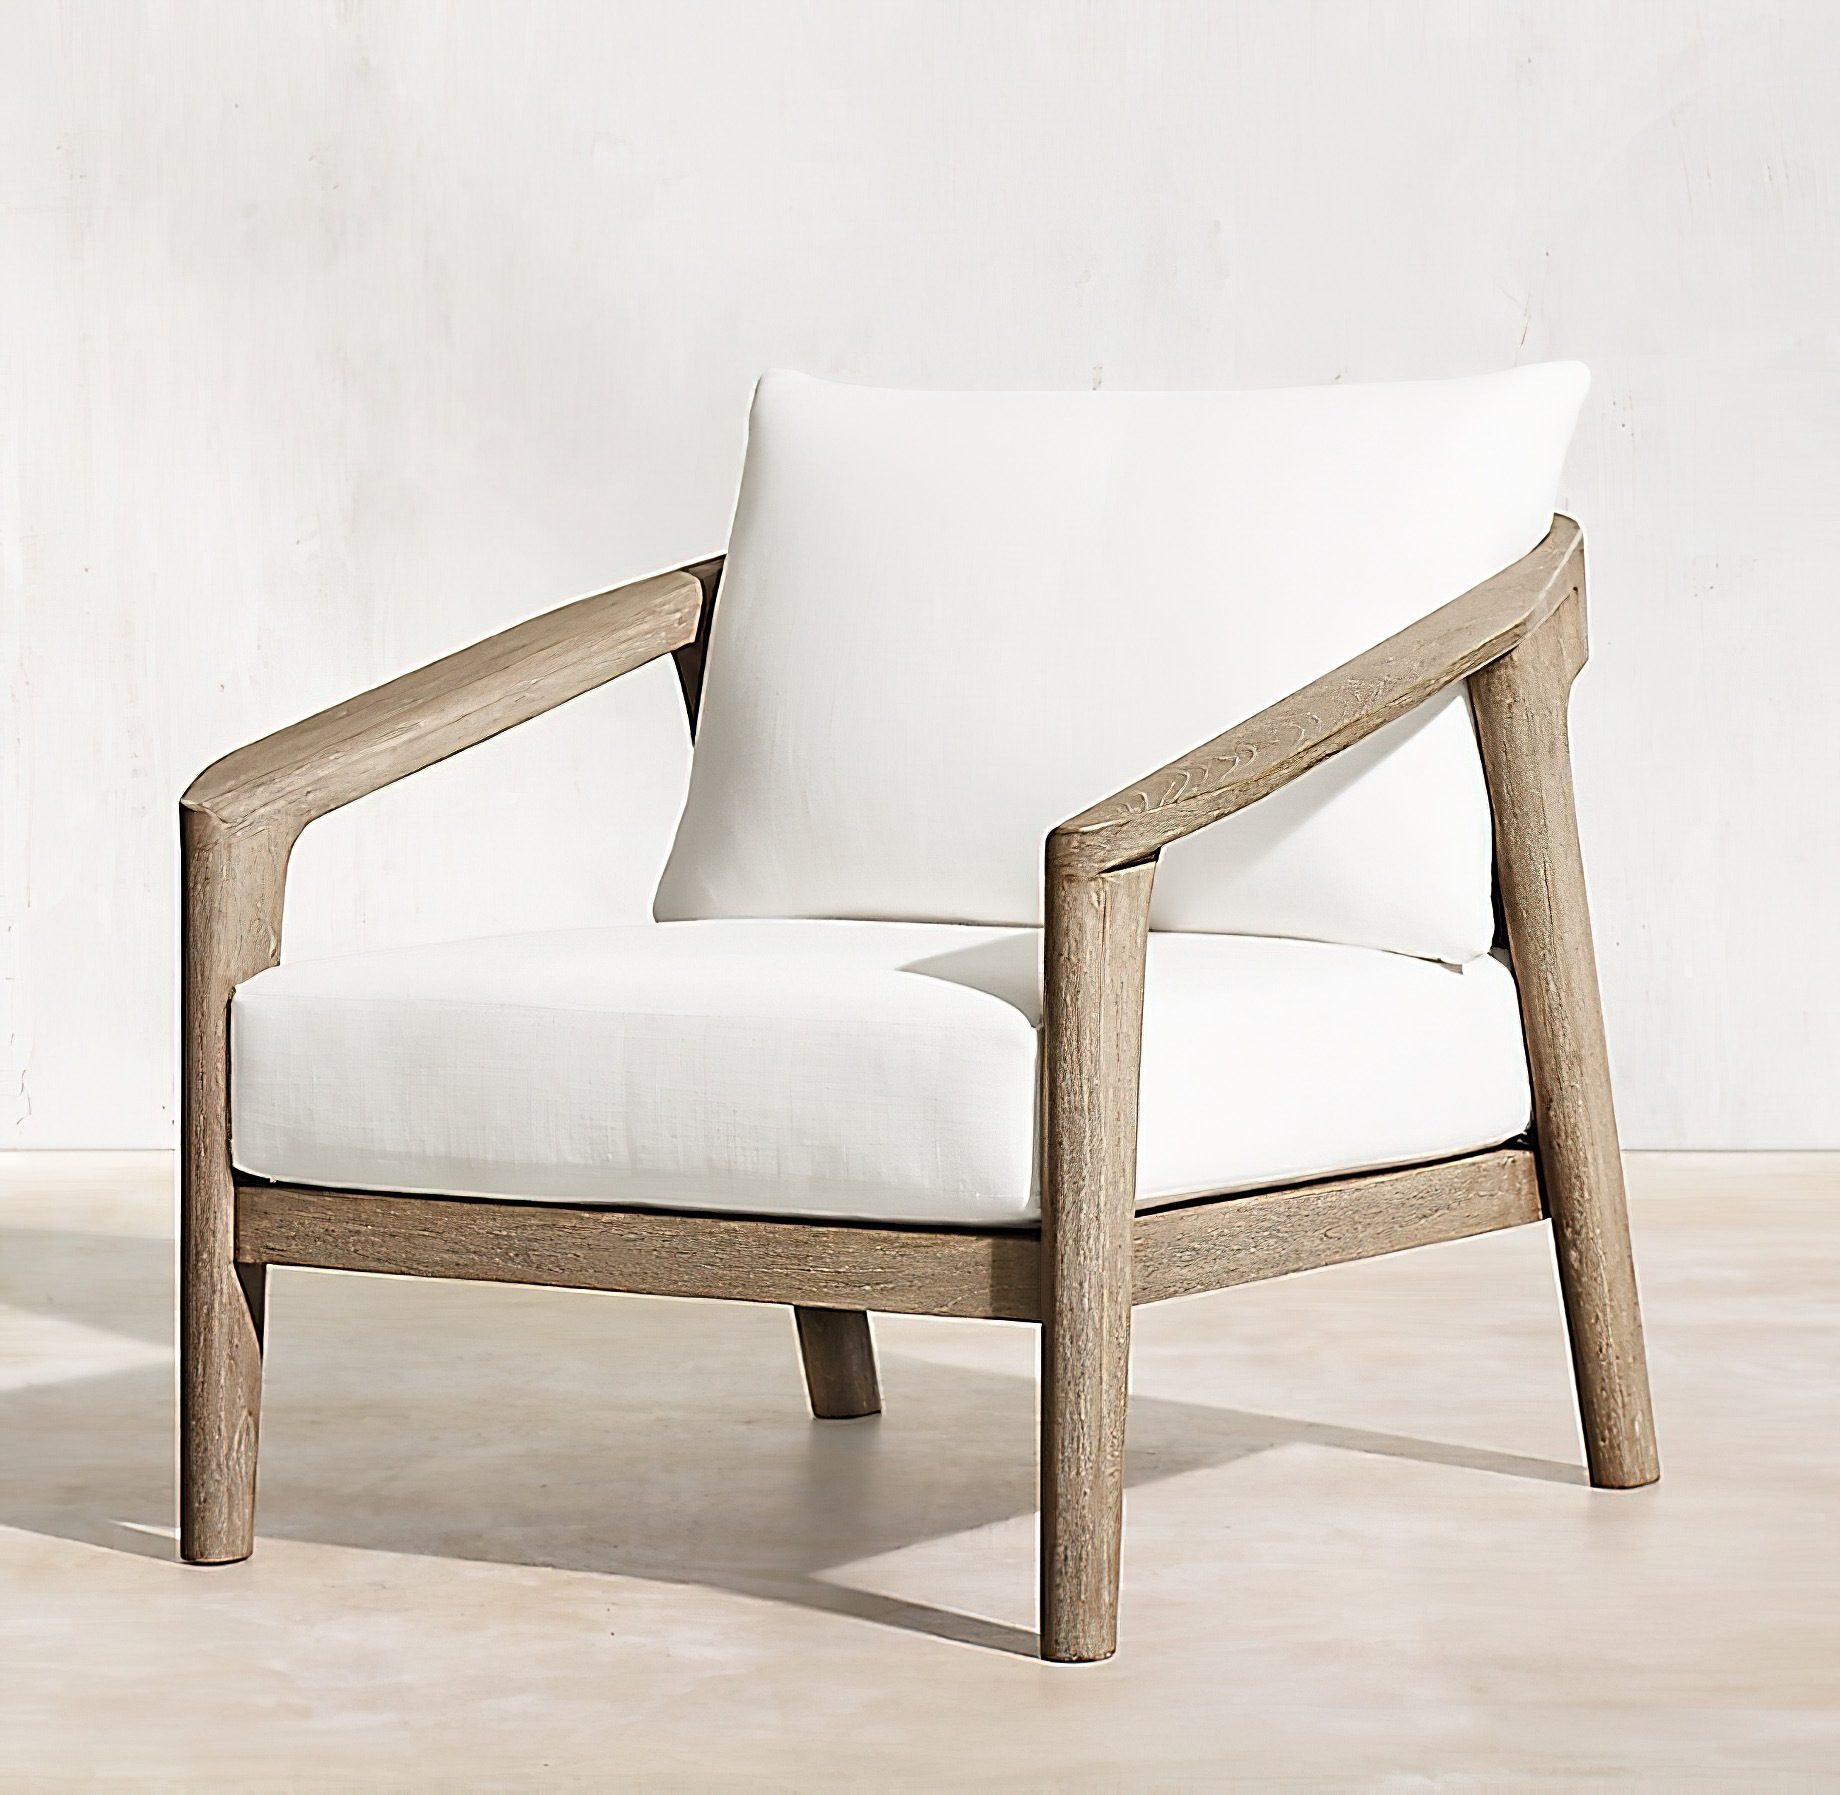 Malta Teak Collection Outdoor Furniture Design for RH - Ramon Esteve - Malta Teak Lounge Chair